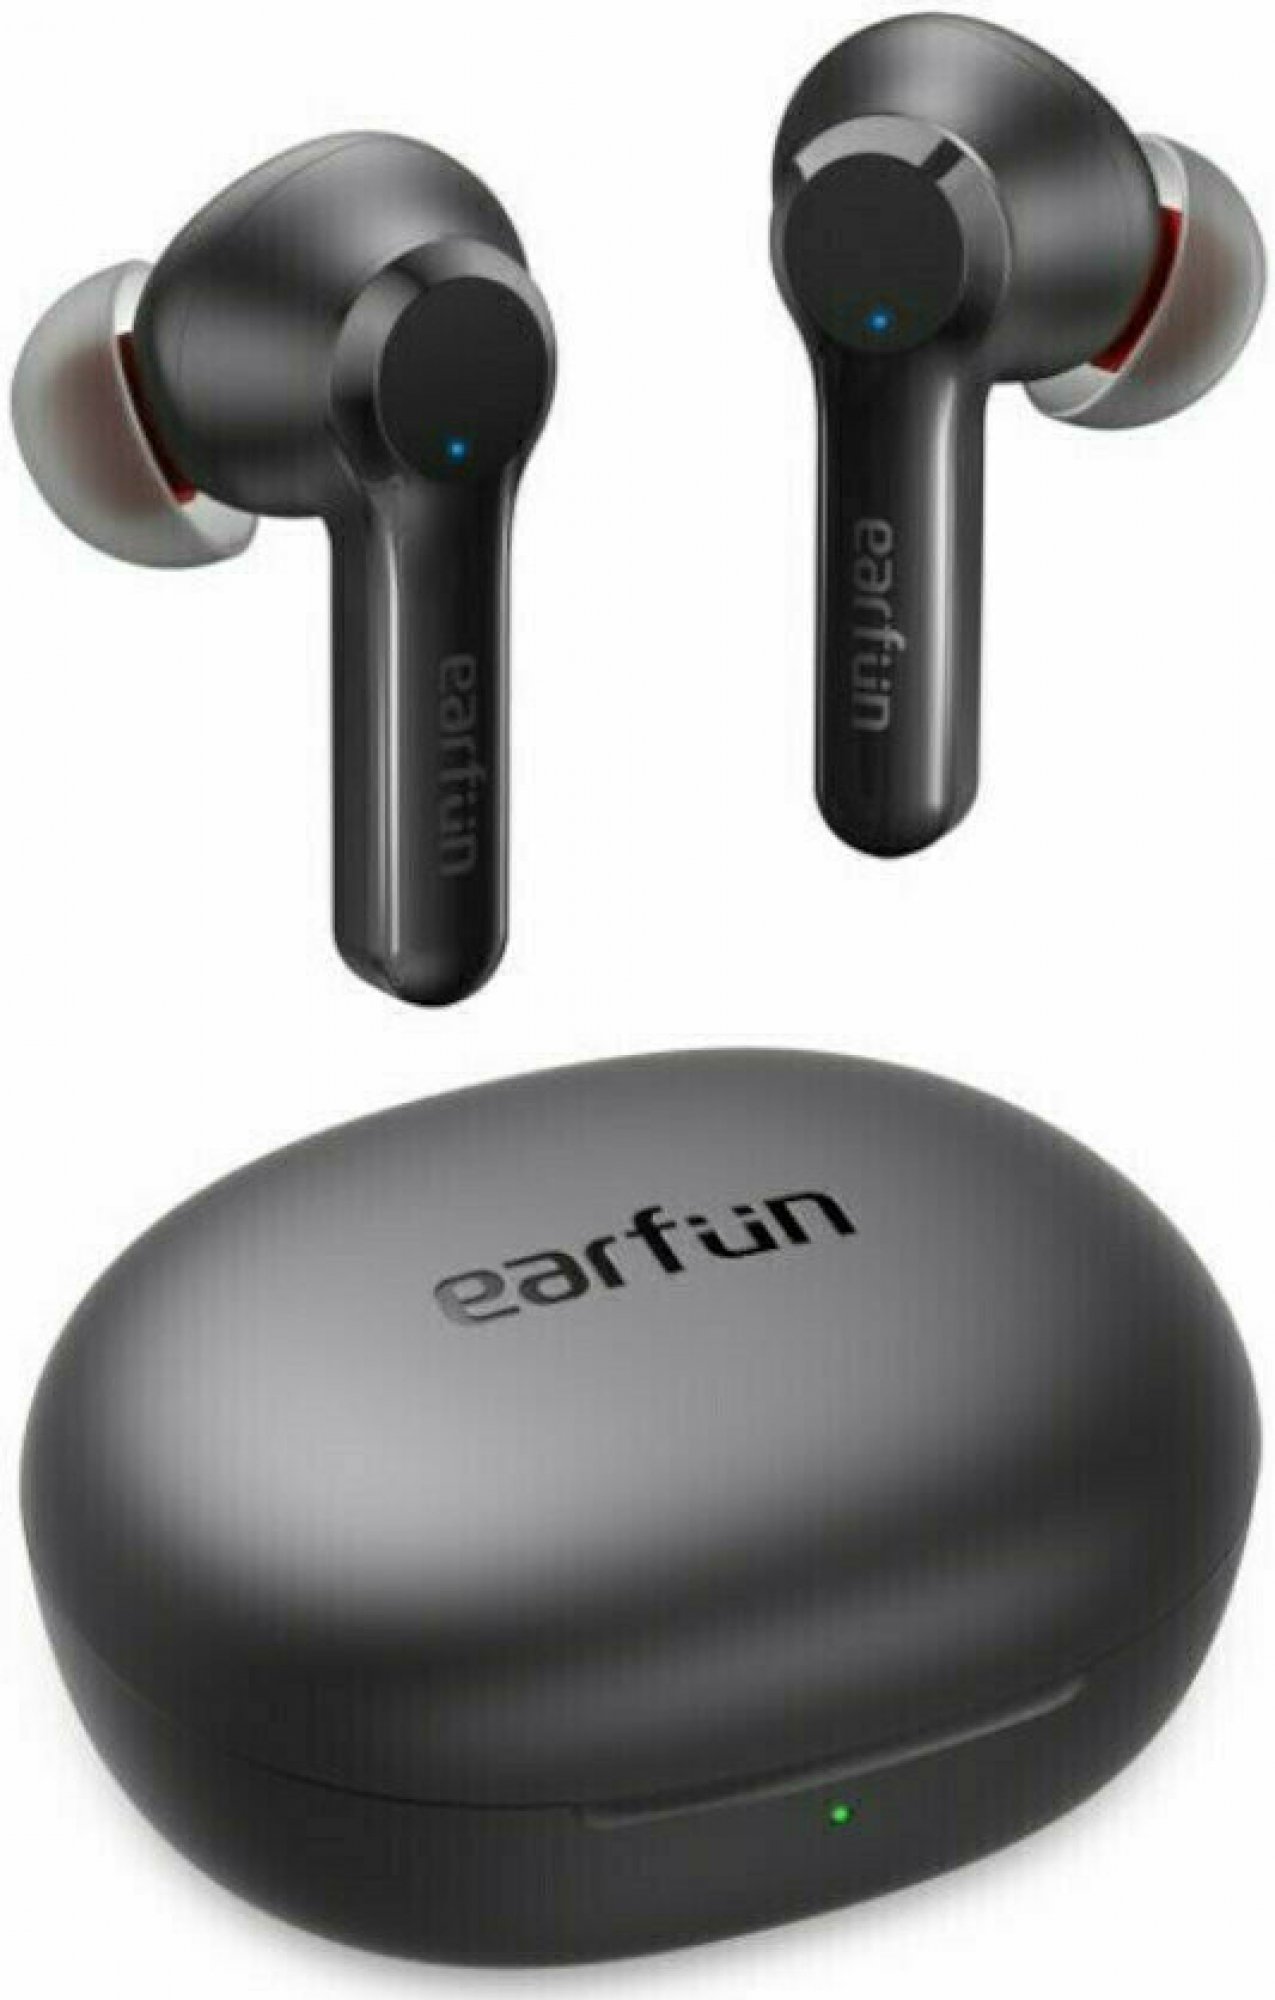 EarFun Air Pro 2